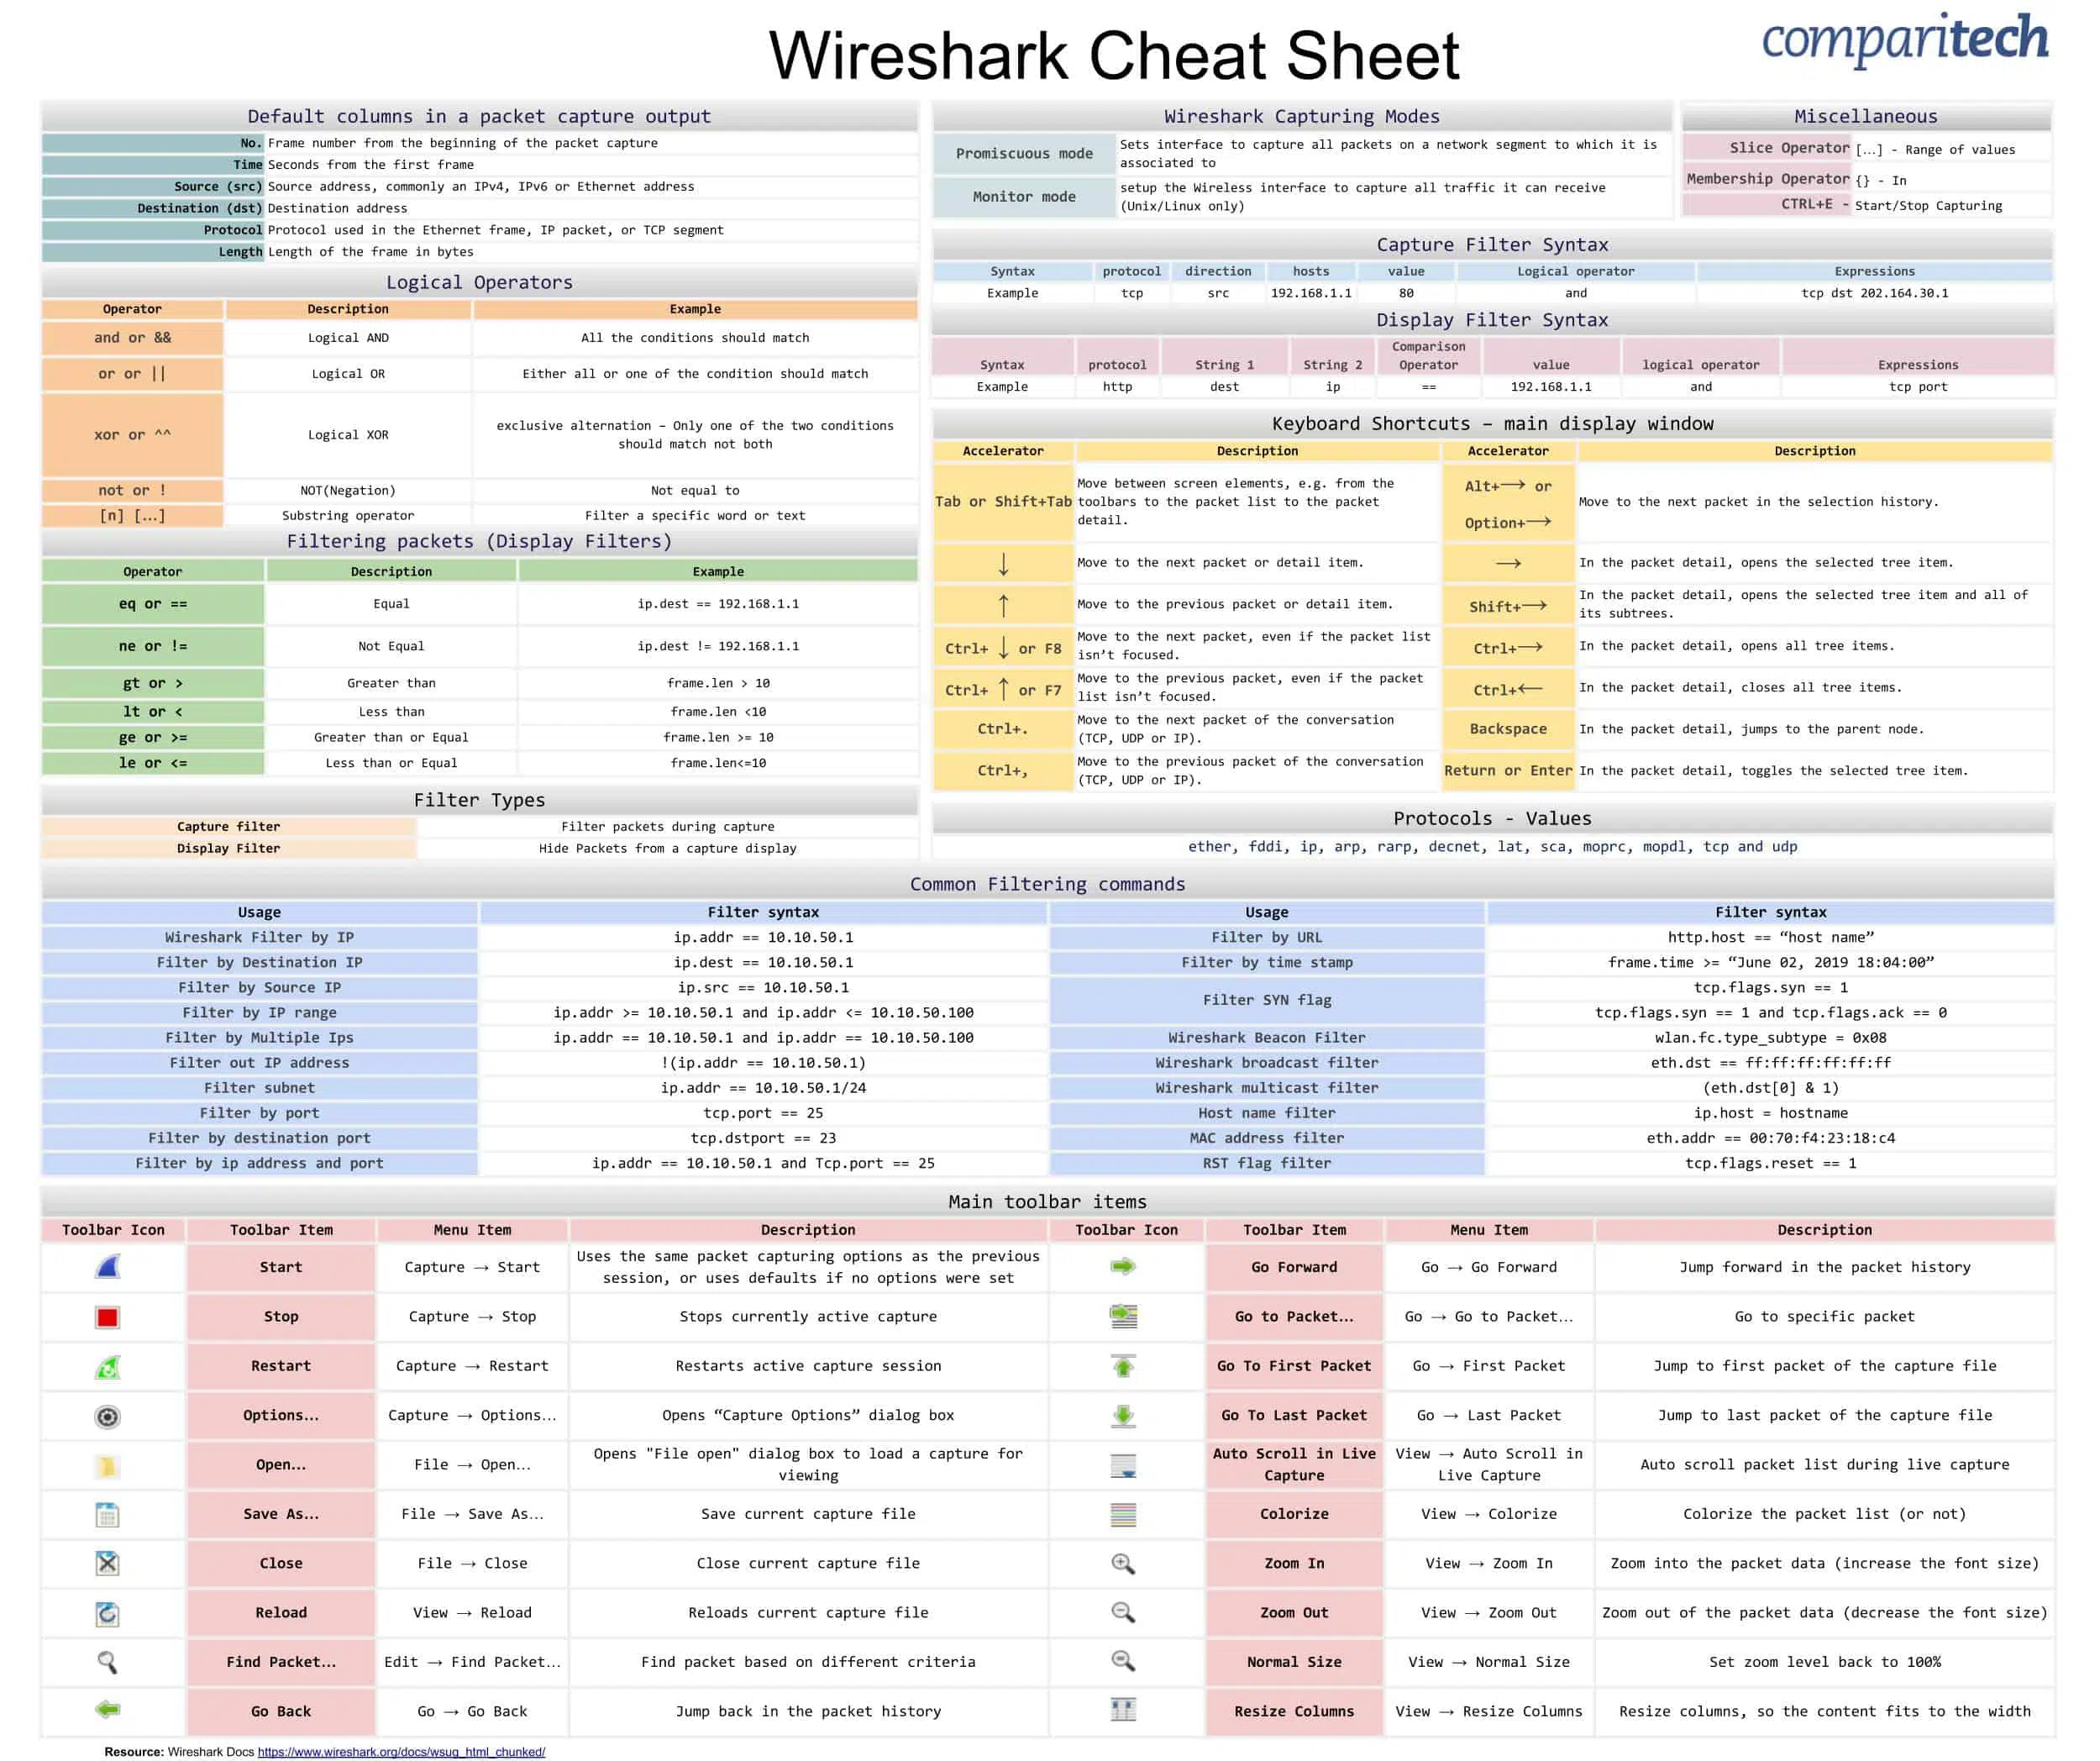 Wireshark Cheat Sheet Downloadable JPG